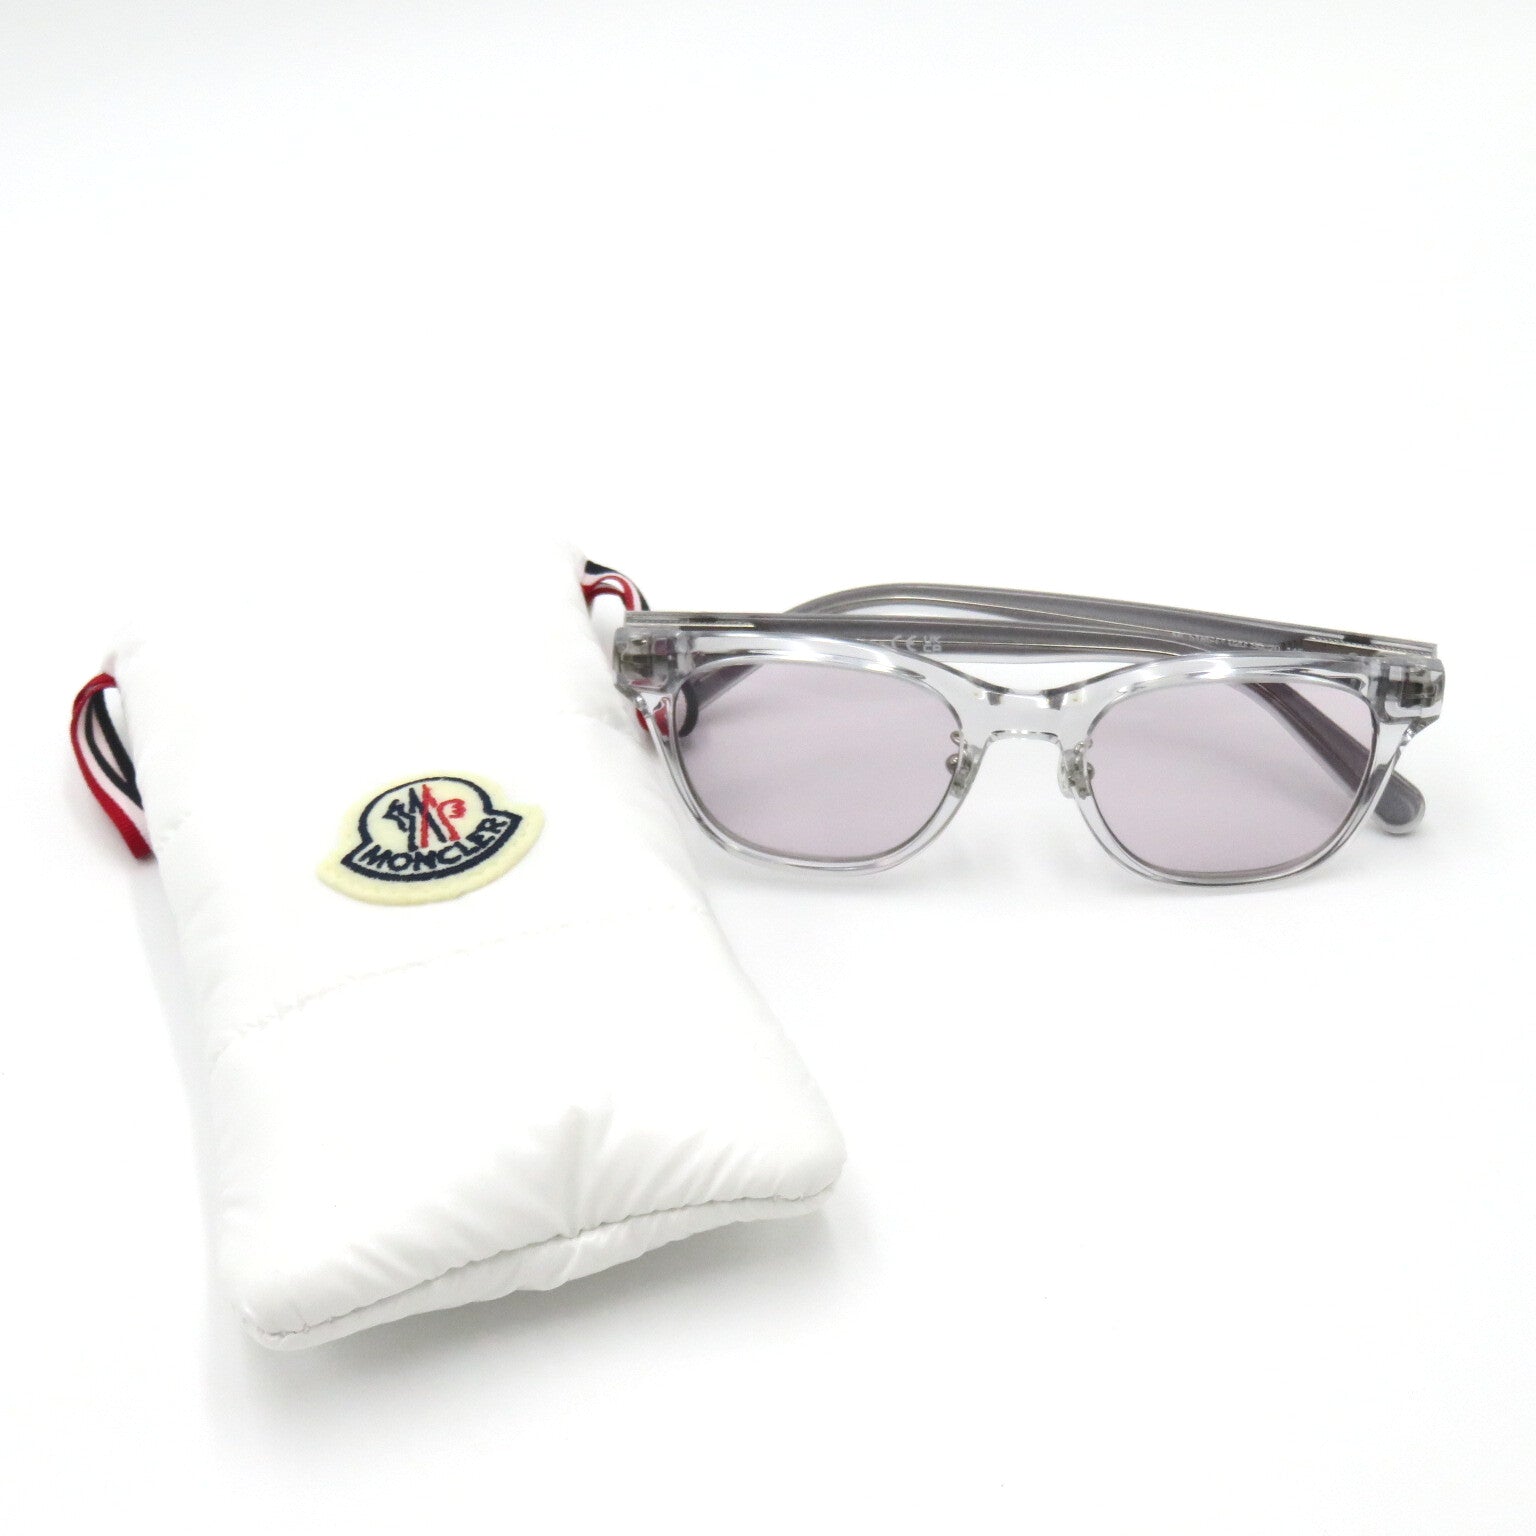 Moncler MONCLER S Glasses    Clear / White / Light Grey Lens 5185D 020(50)